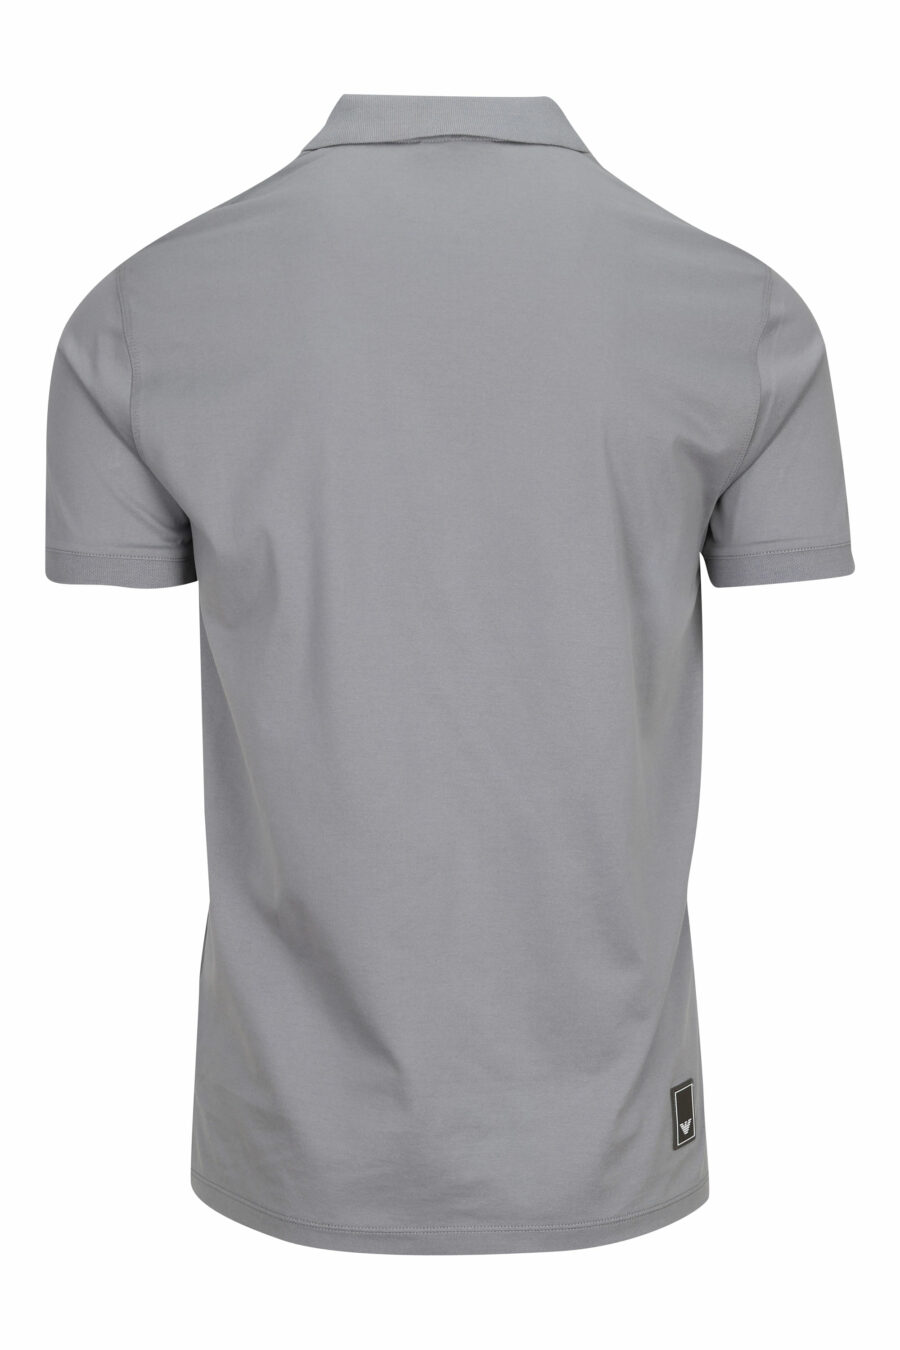 Grey polo shirt with monochrome eagle mini logo - 8058997613835